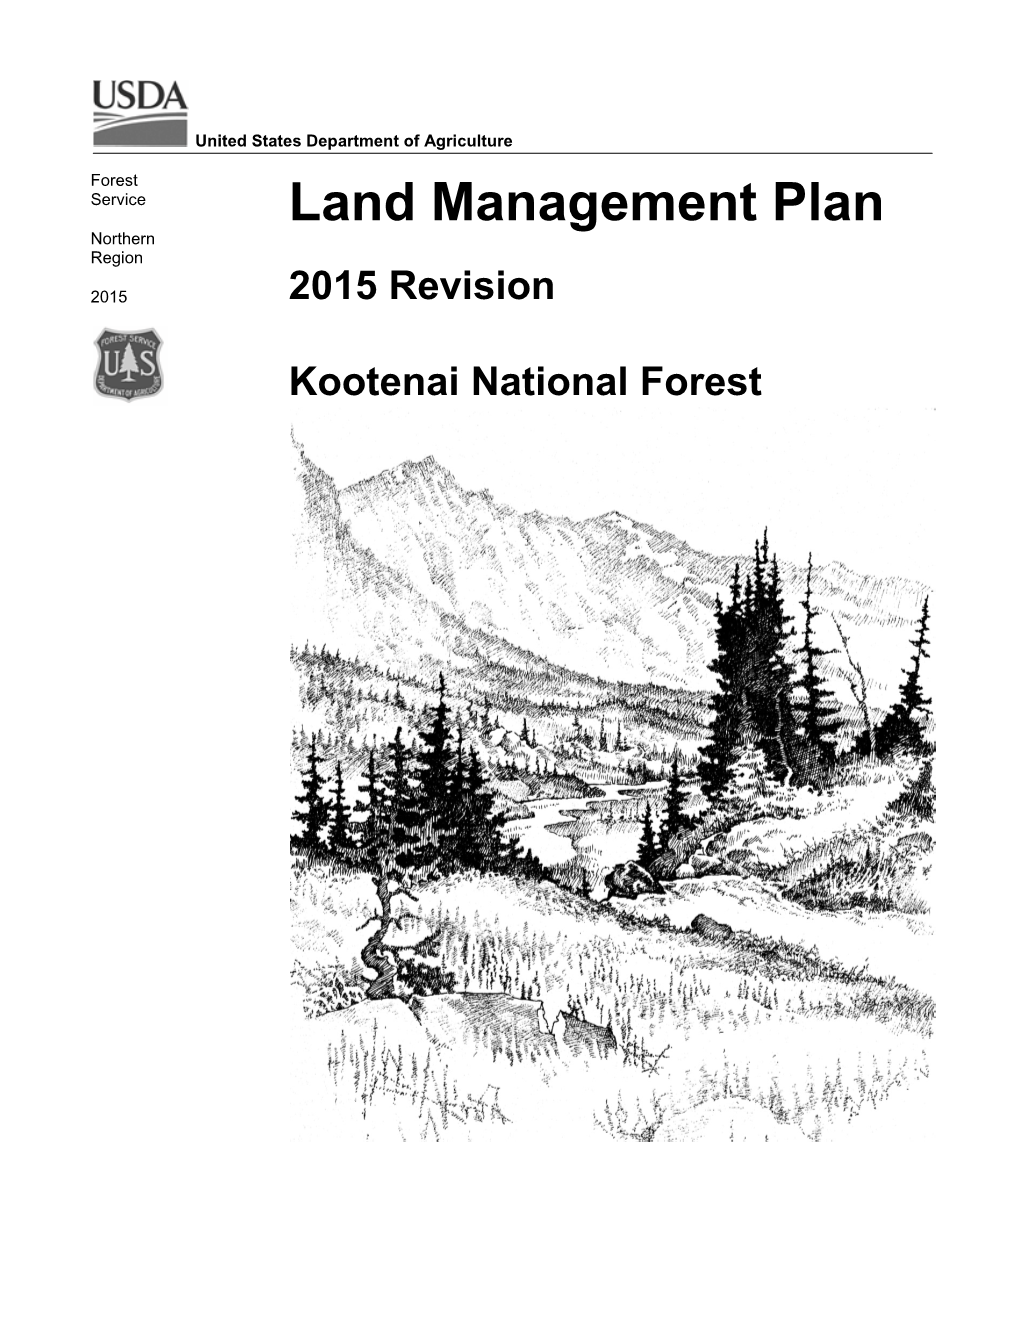 Kootenai National Forest Land Management Plan, 2015